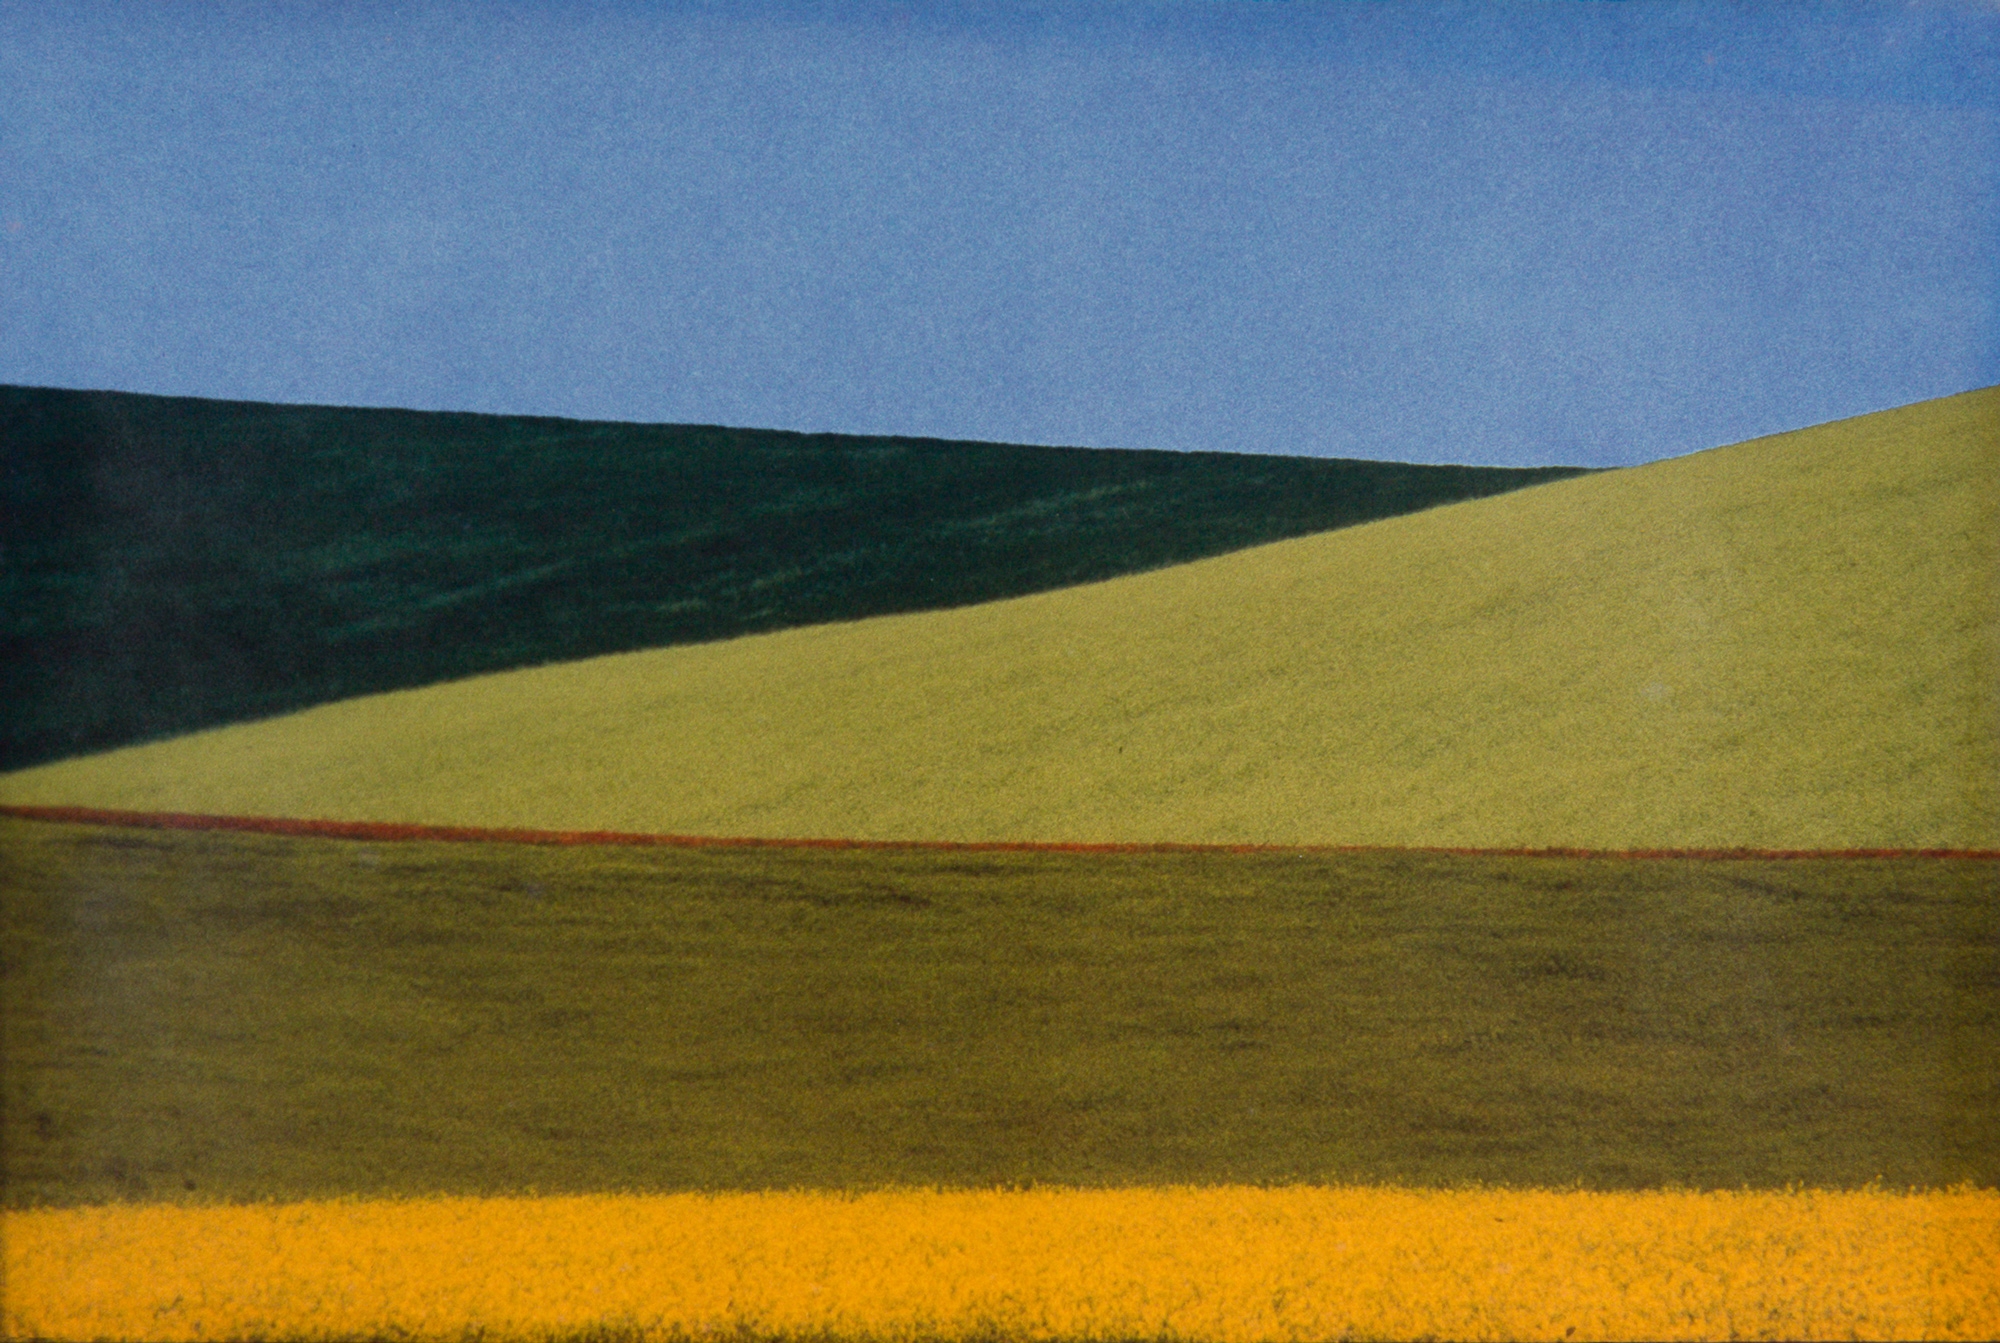 Paesaggio by Franco Fontana, 1978